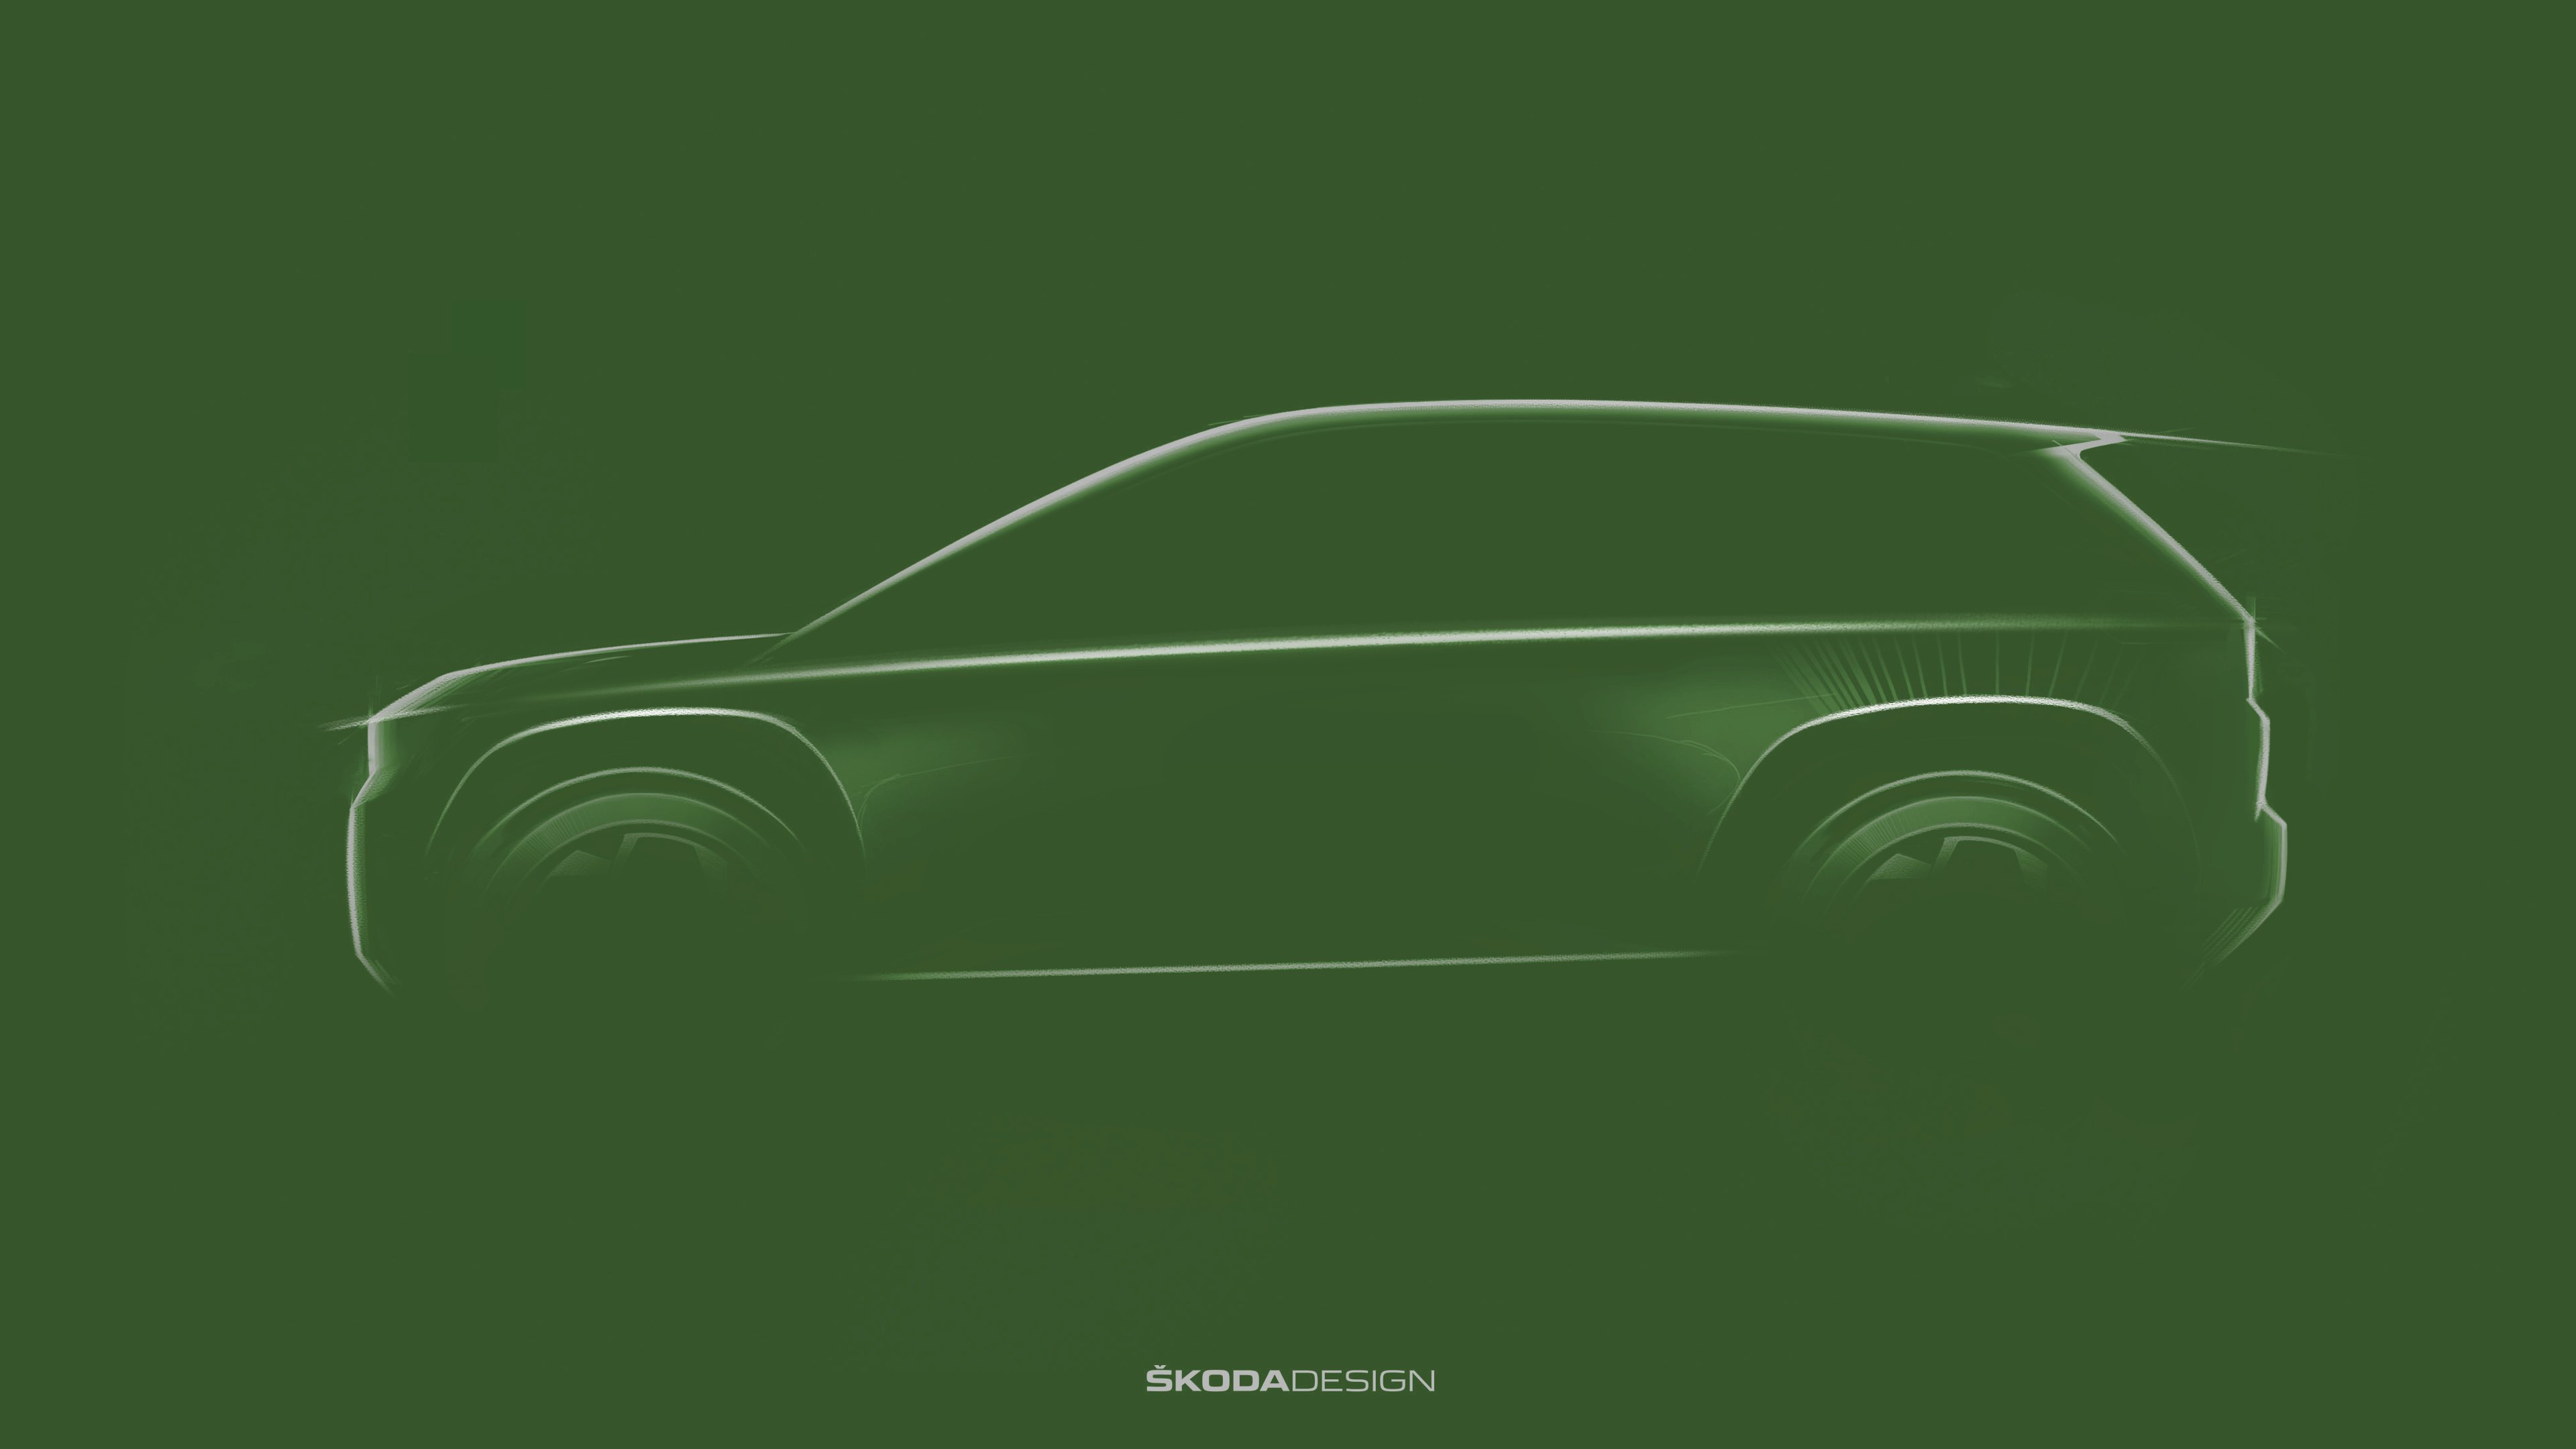 Sketch of the Skoda electric car